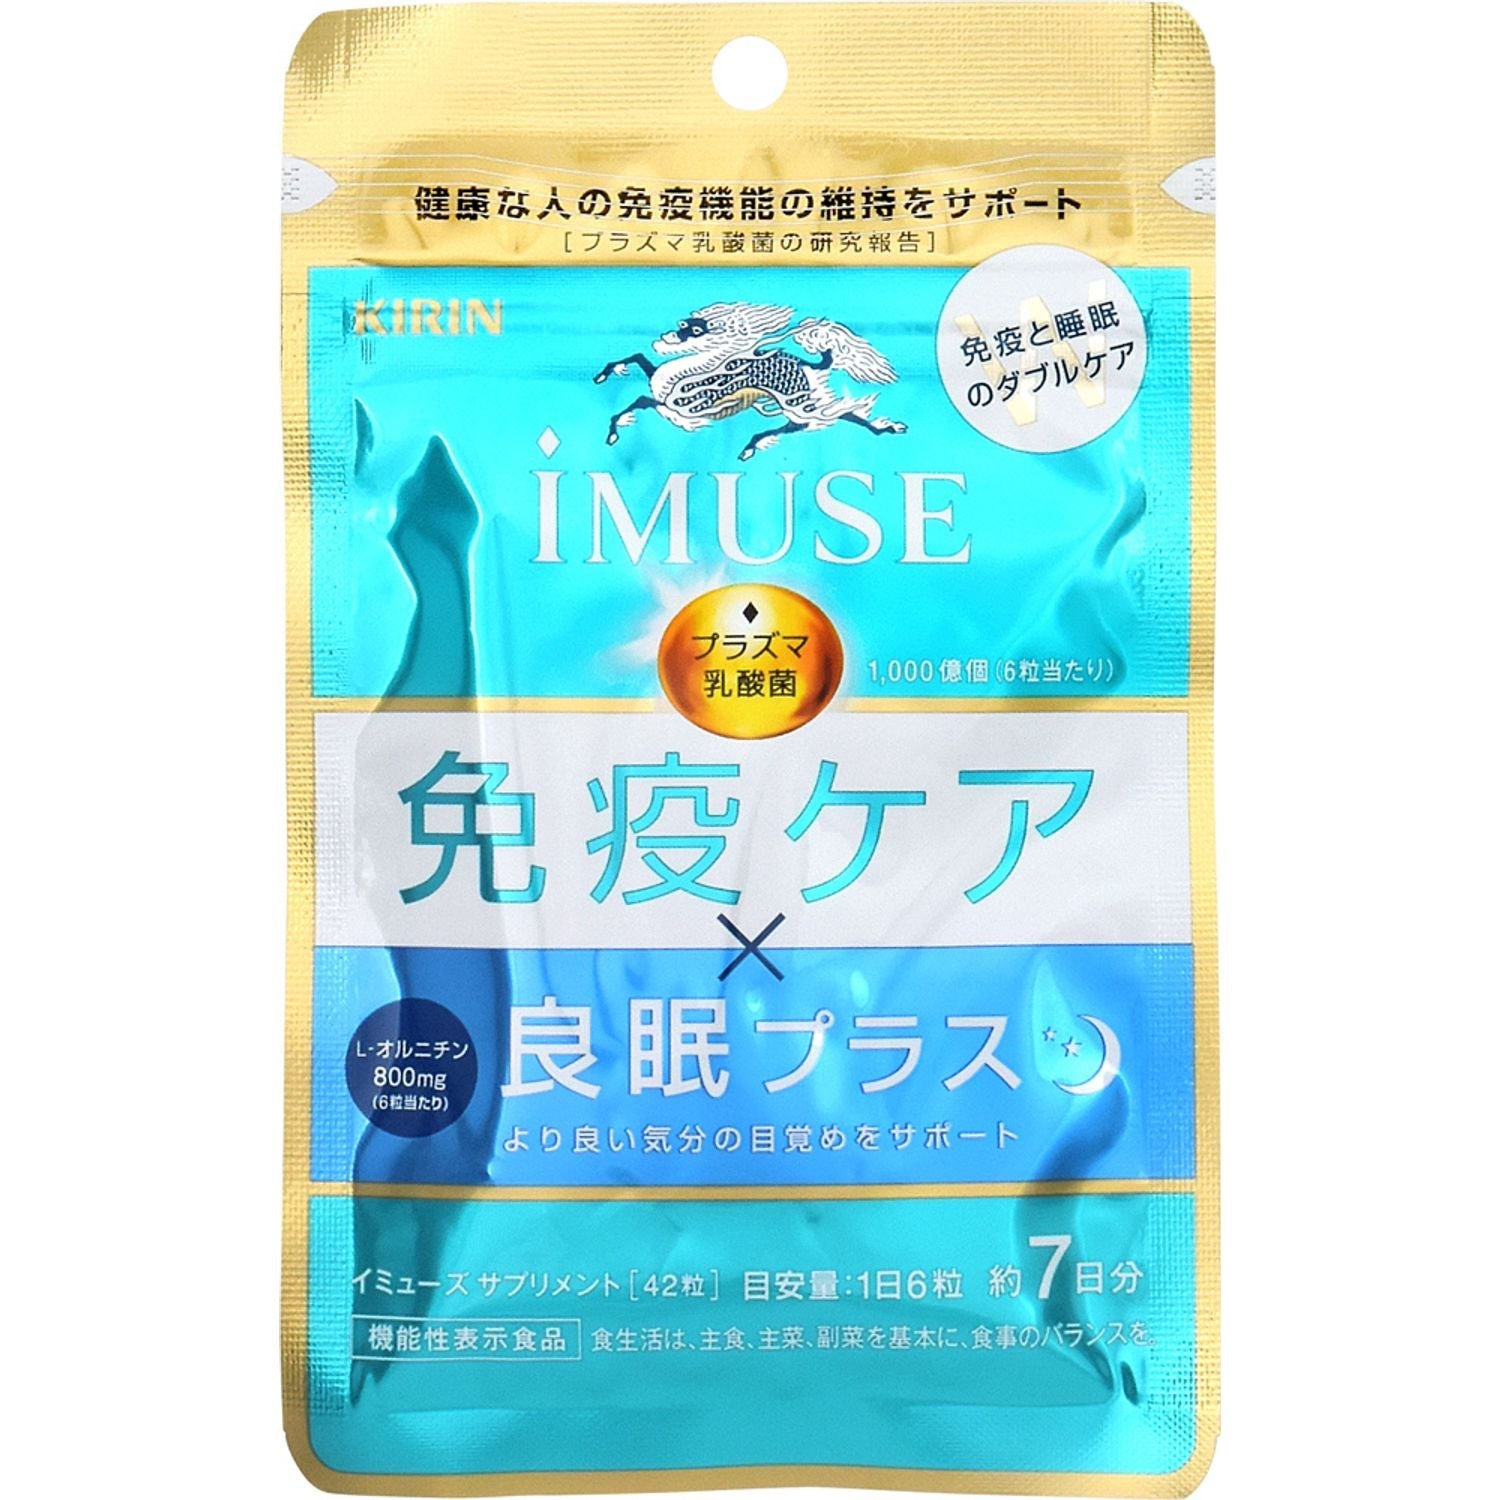 iMUSE免疫ケア 3日分 - 健康用品